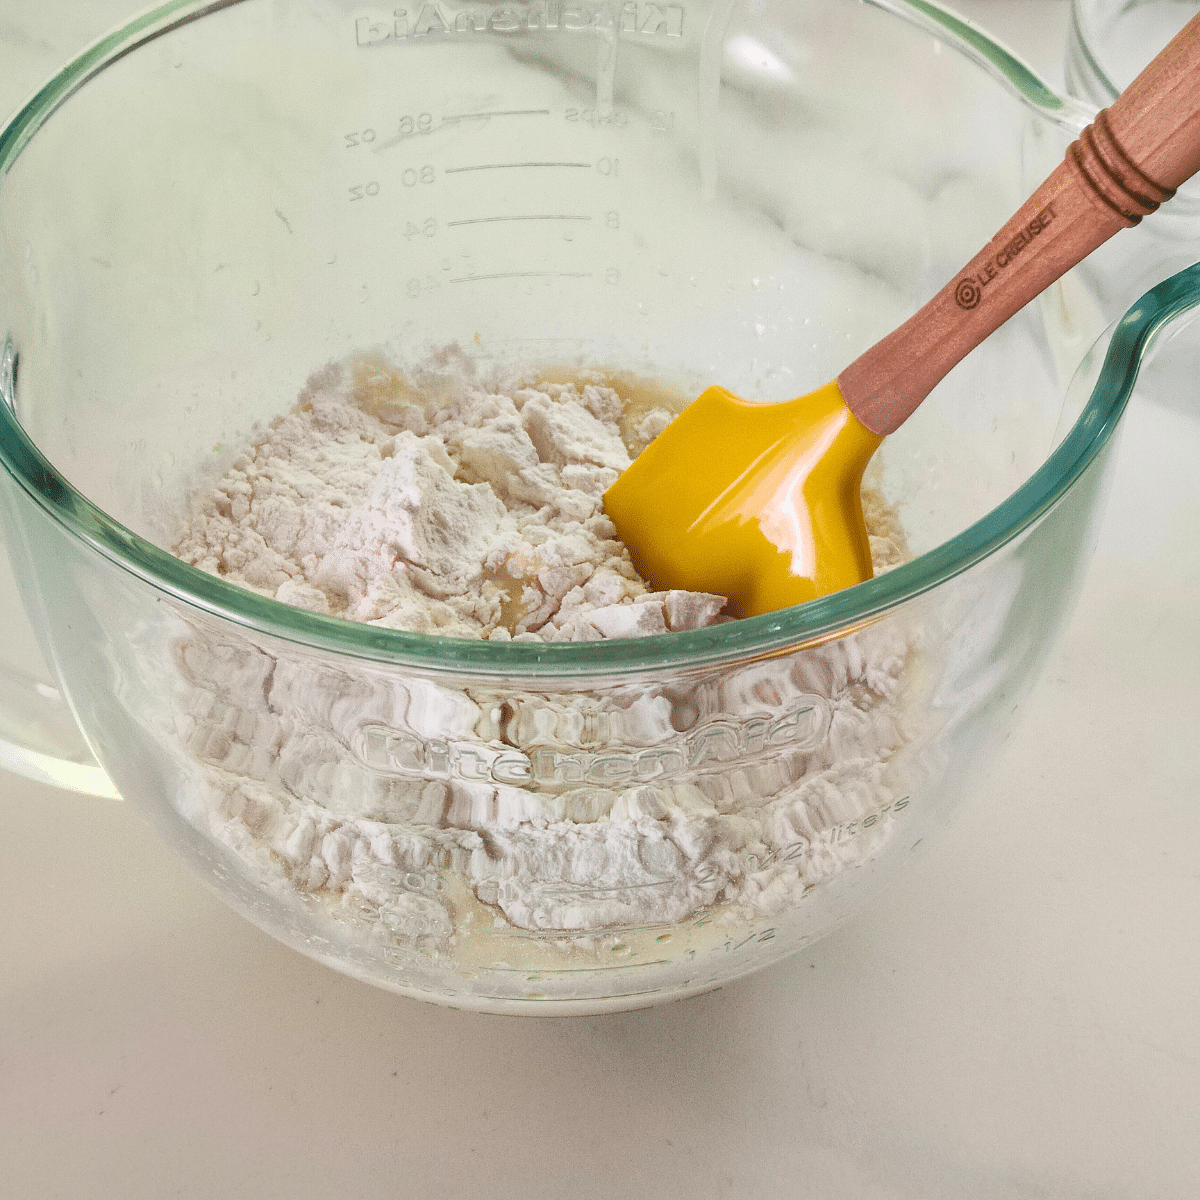 Combine flour mixture with egg mixture